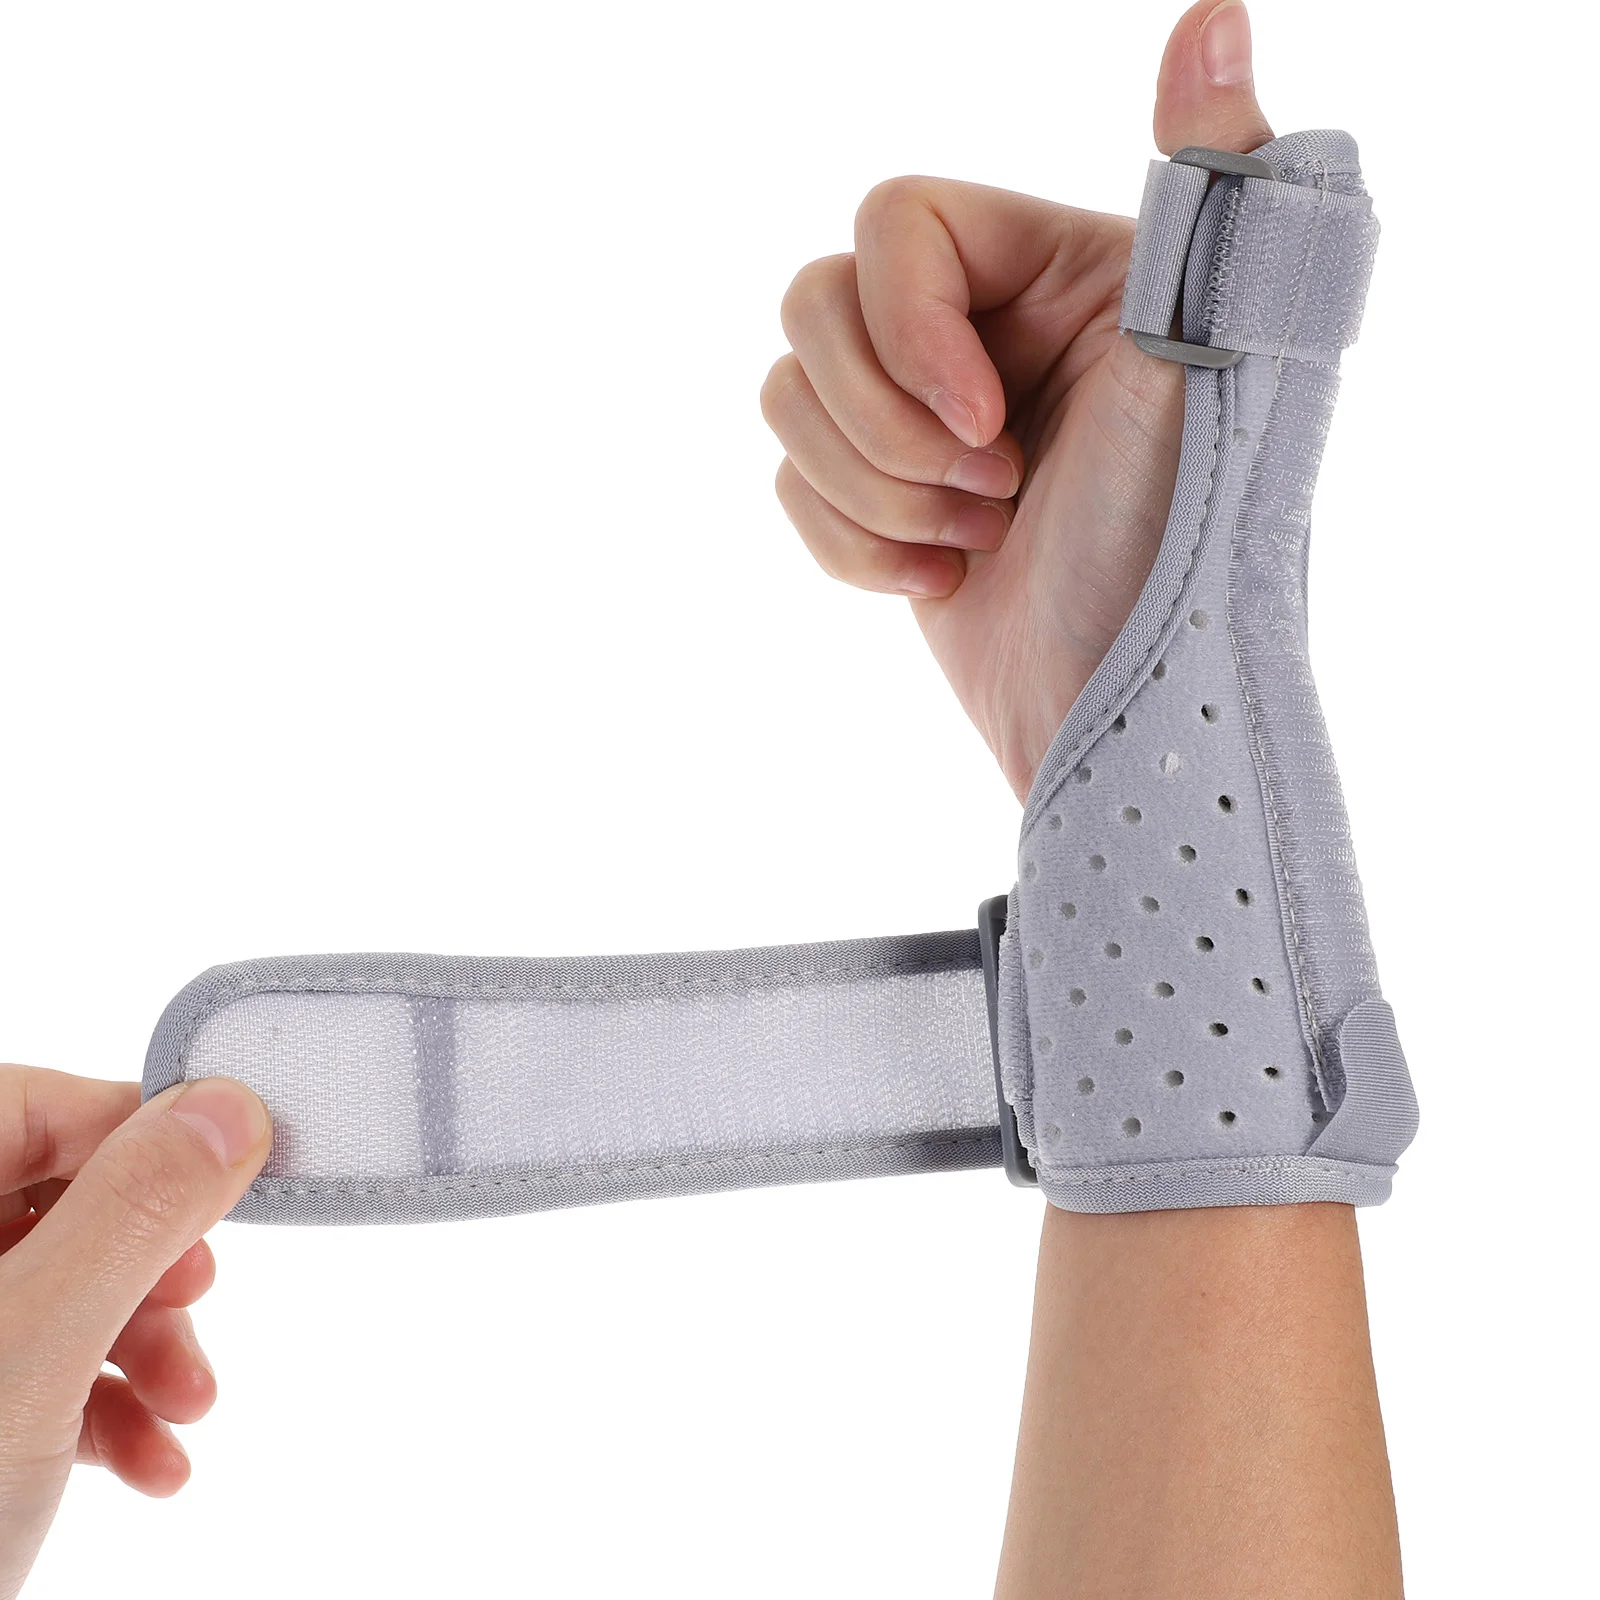 

Thumb Splint Thumb Splint Thumb Brace- Thumb Support Finger Belt Protector Tendonitis Arthritis Sprains Support Thumb Sheath